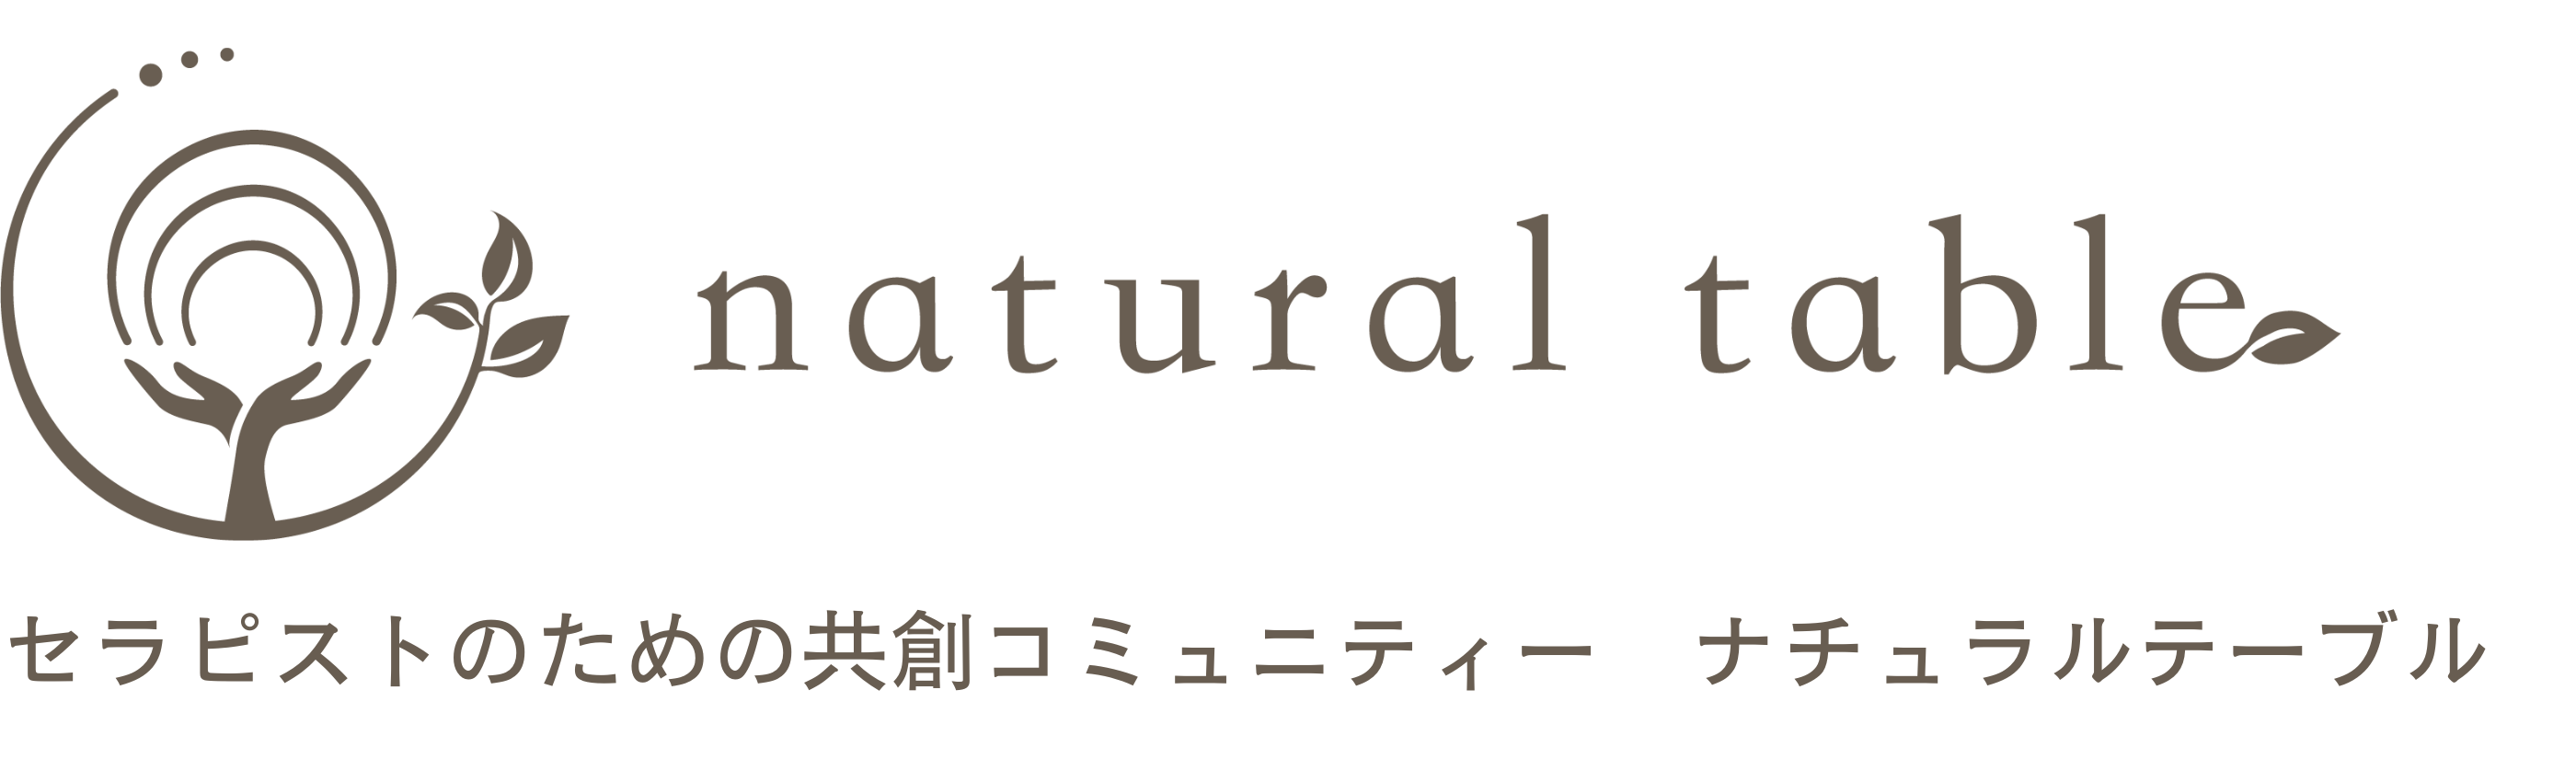 natural table